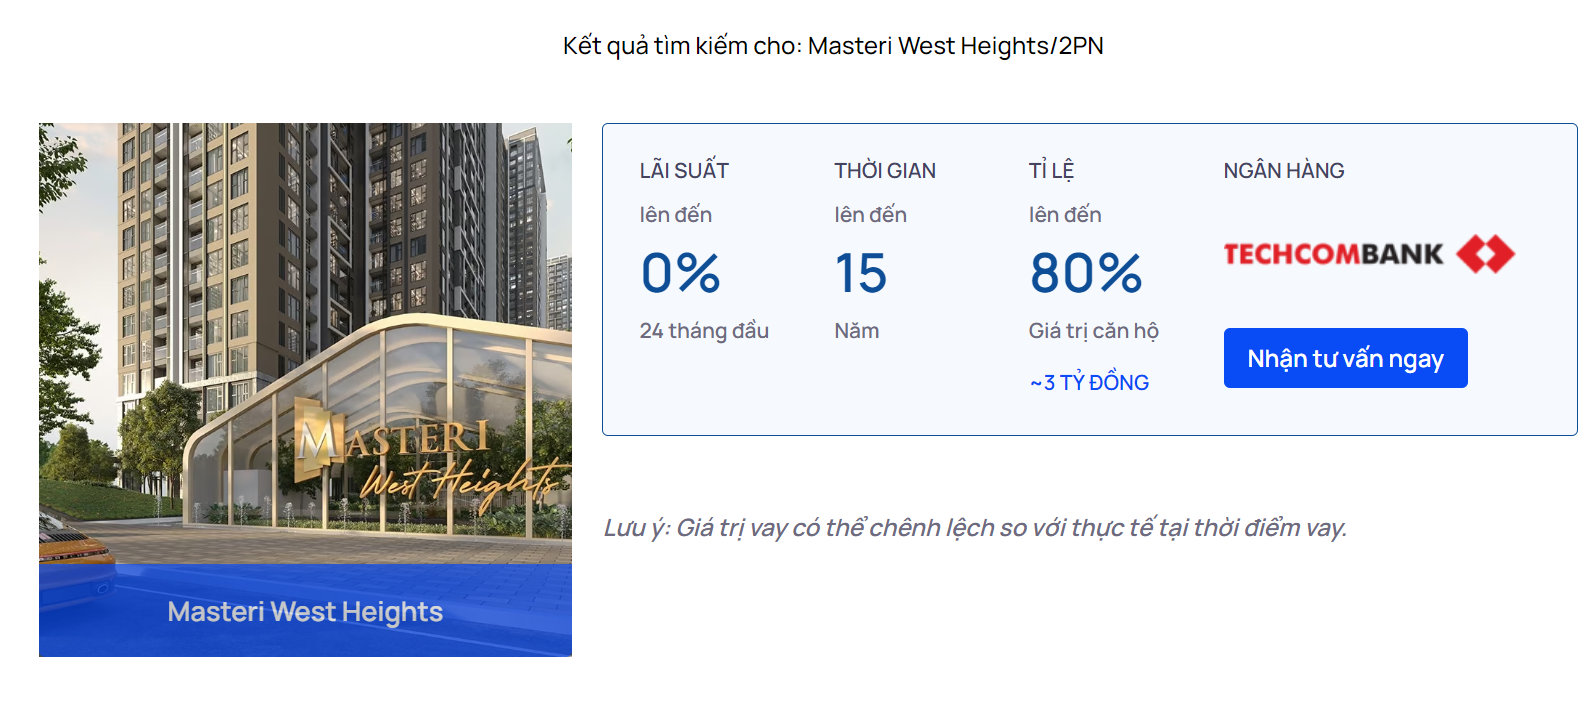 luong-nghe-quan-ly-du-lich-nen-vay-mua-tra-gop-can-ho-2pn-du-an-masteri-west-heights-nhu-the-nao-onehousing-4